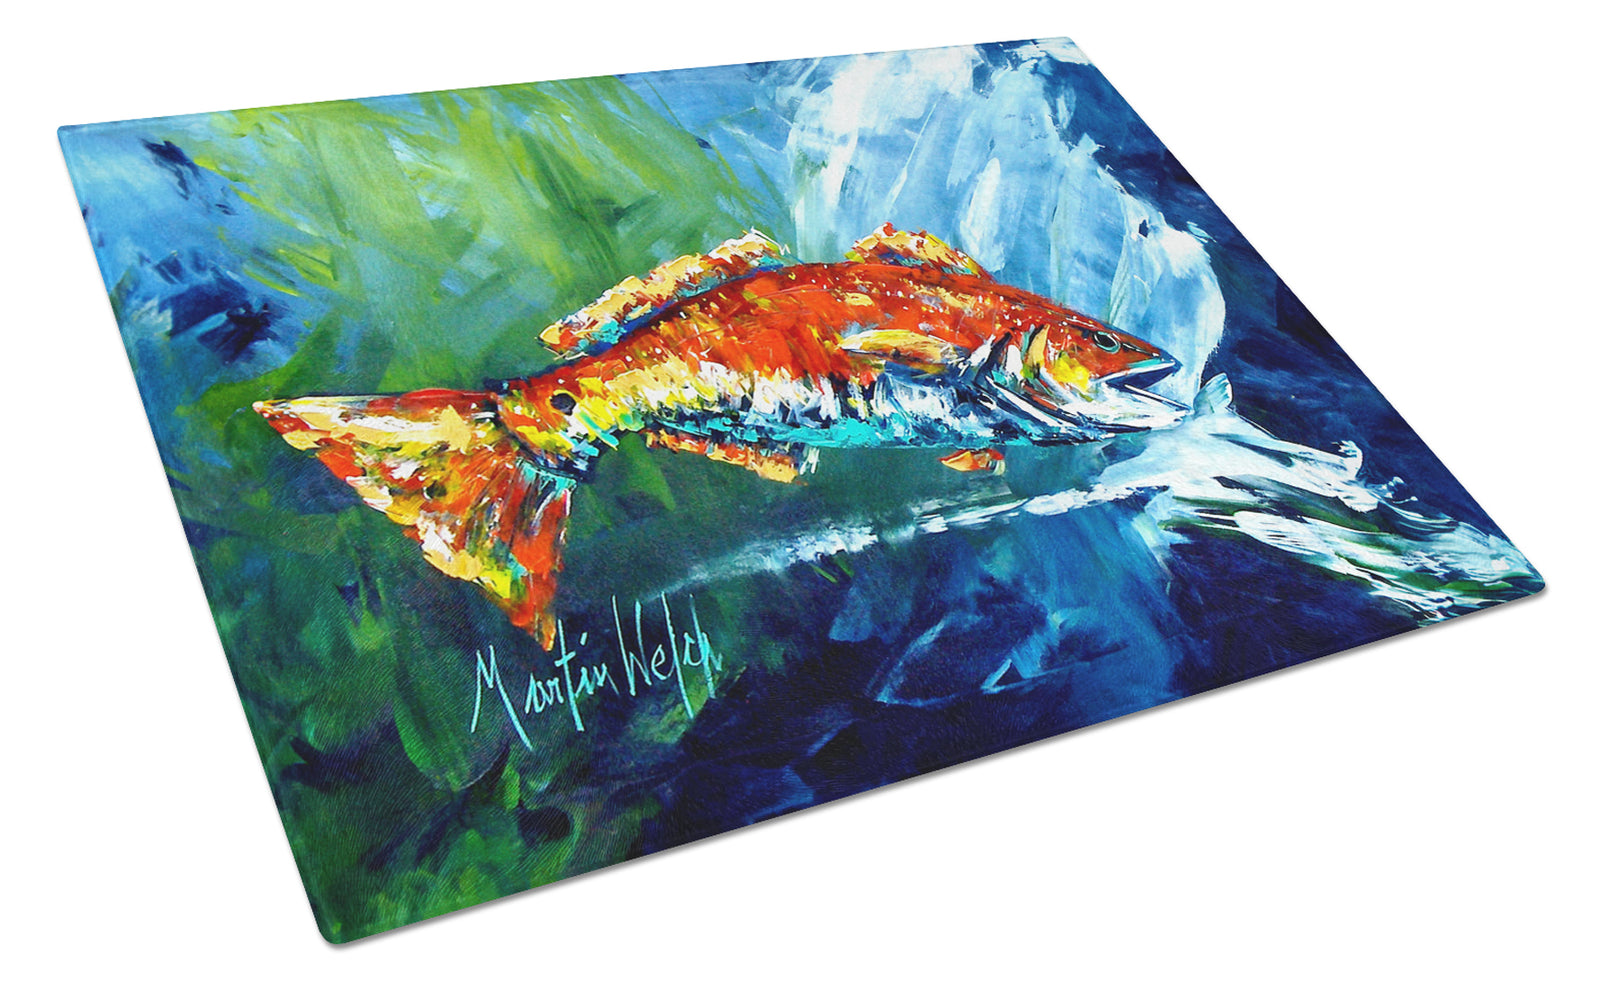 Buy this Break Through Red Fish Glass Cutting Board